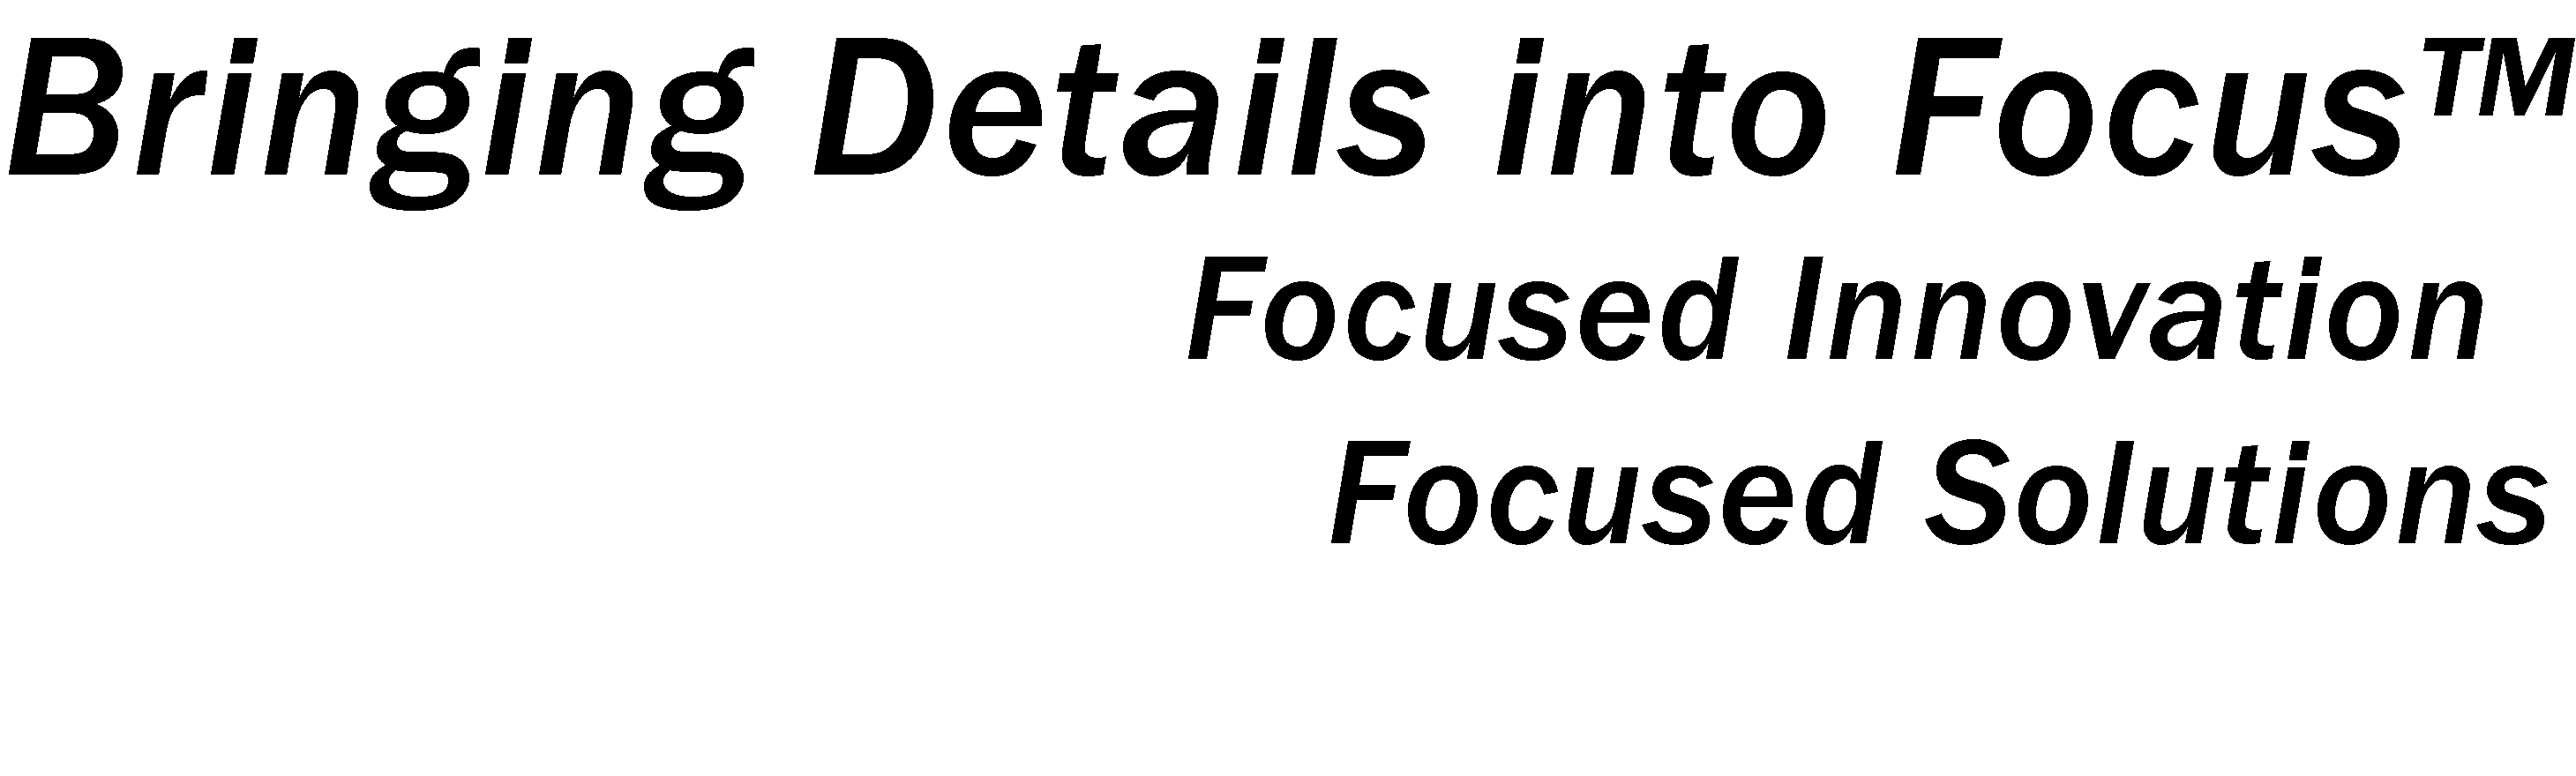 Bringing Details into Focus, Focused Innovation, Focused Solutions